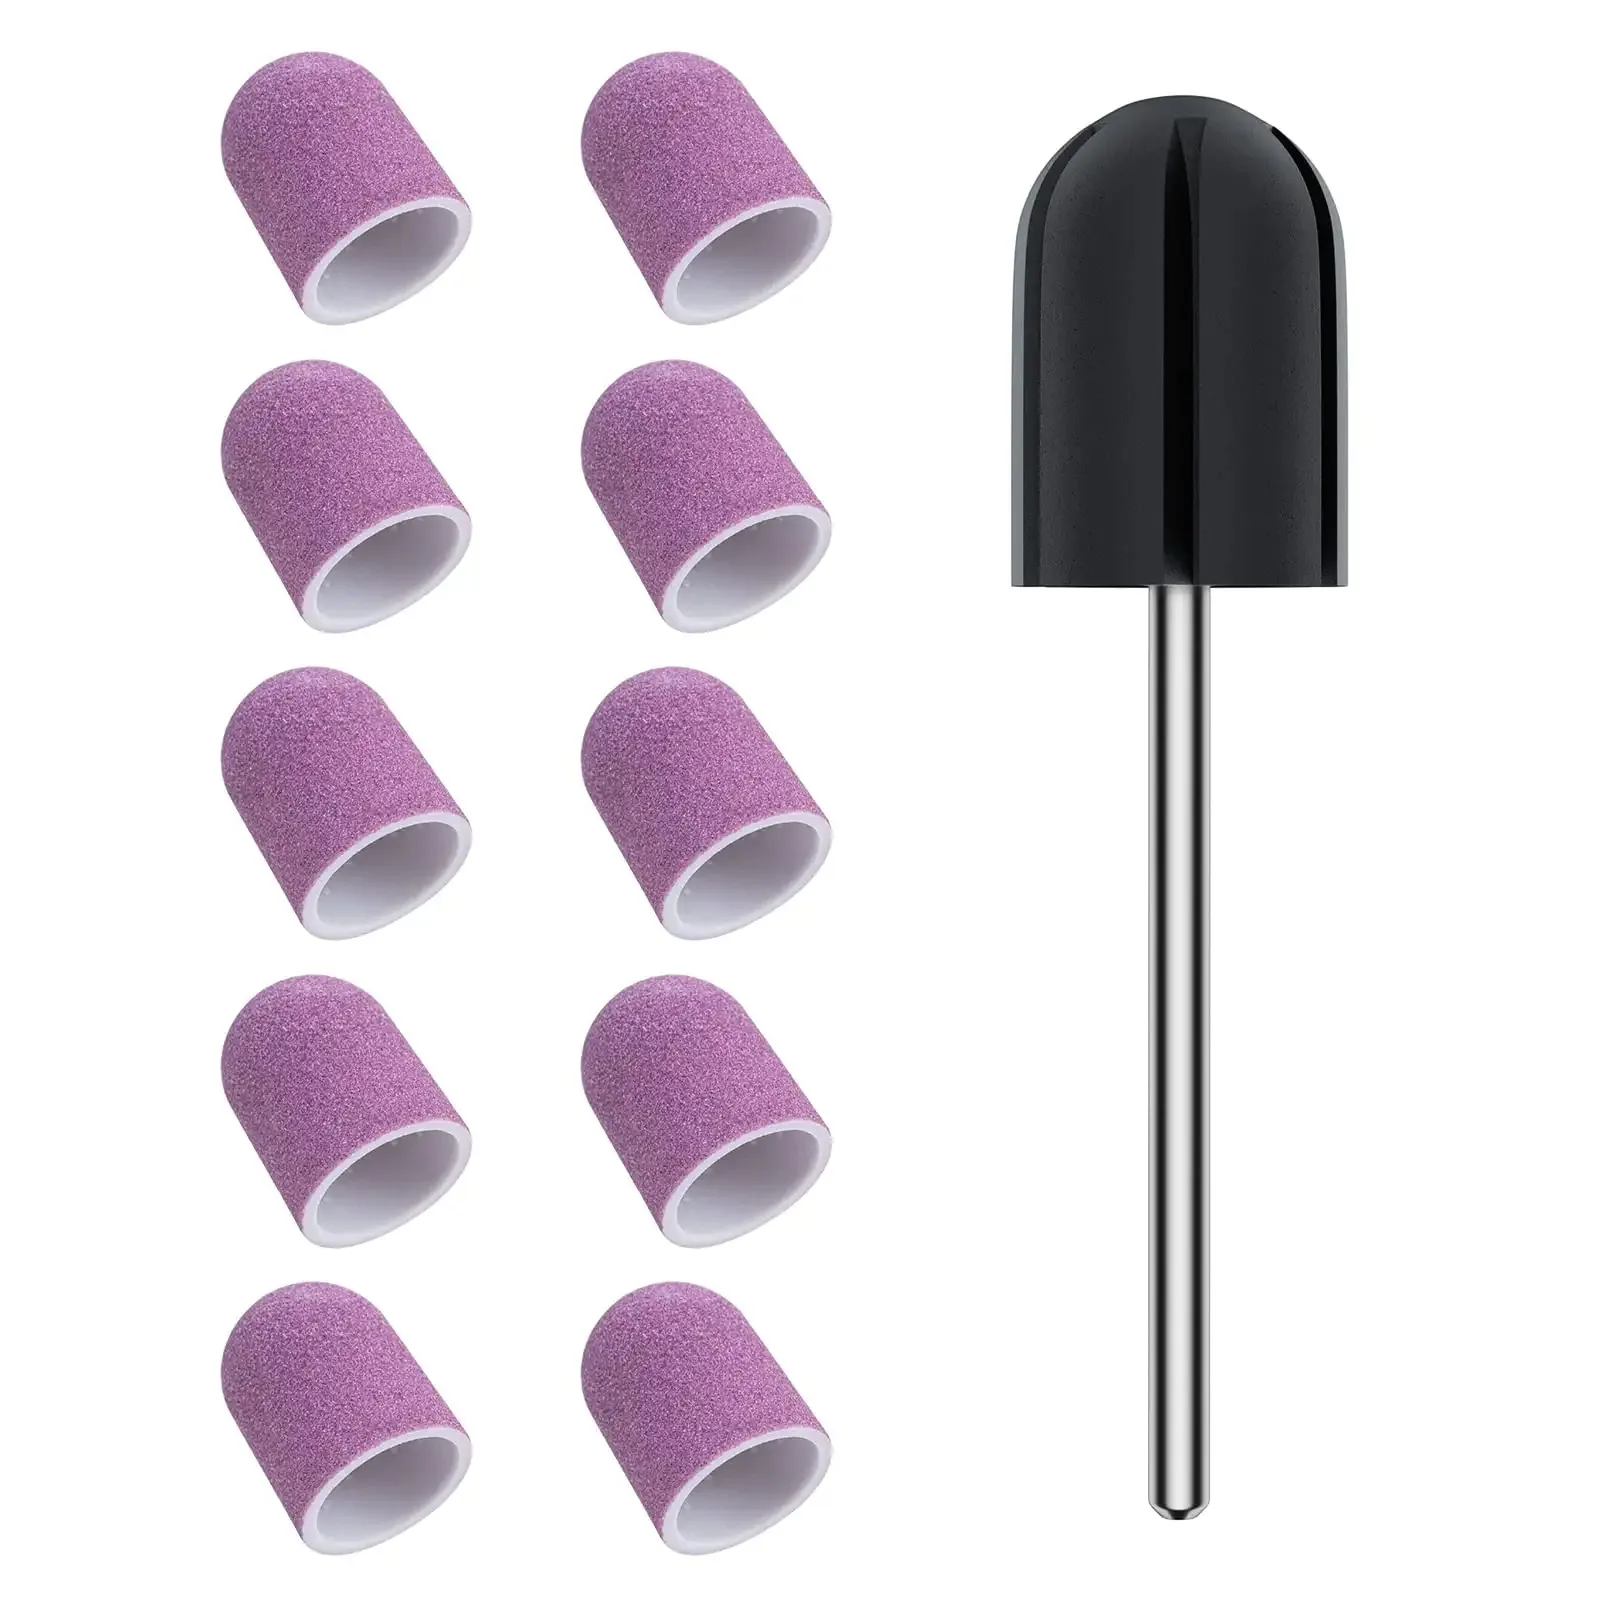 

Fine Grit 10 Pcs Nail Sanding Caps for Foot File Purple (10mm) Callus Remover Manicure Pedicure Nail File Accessories